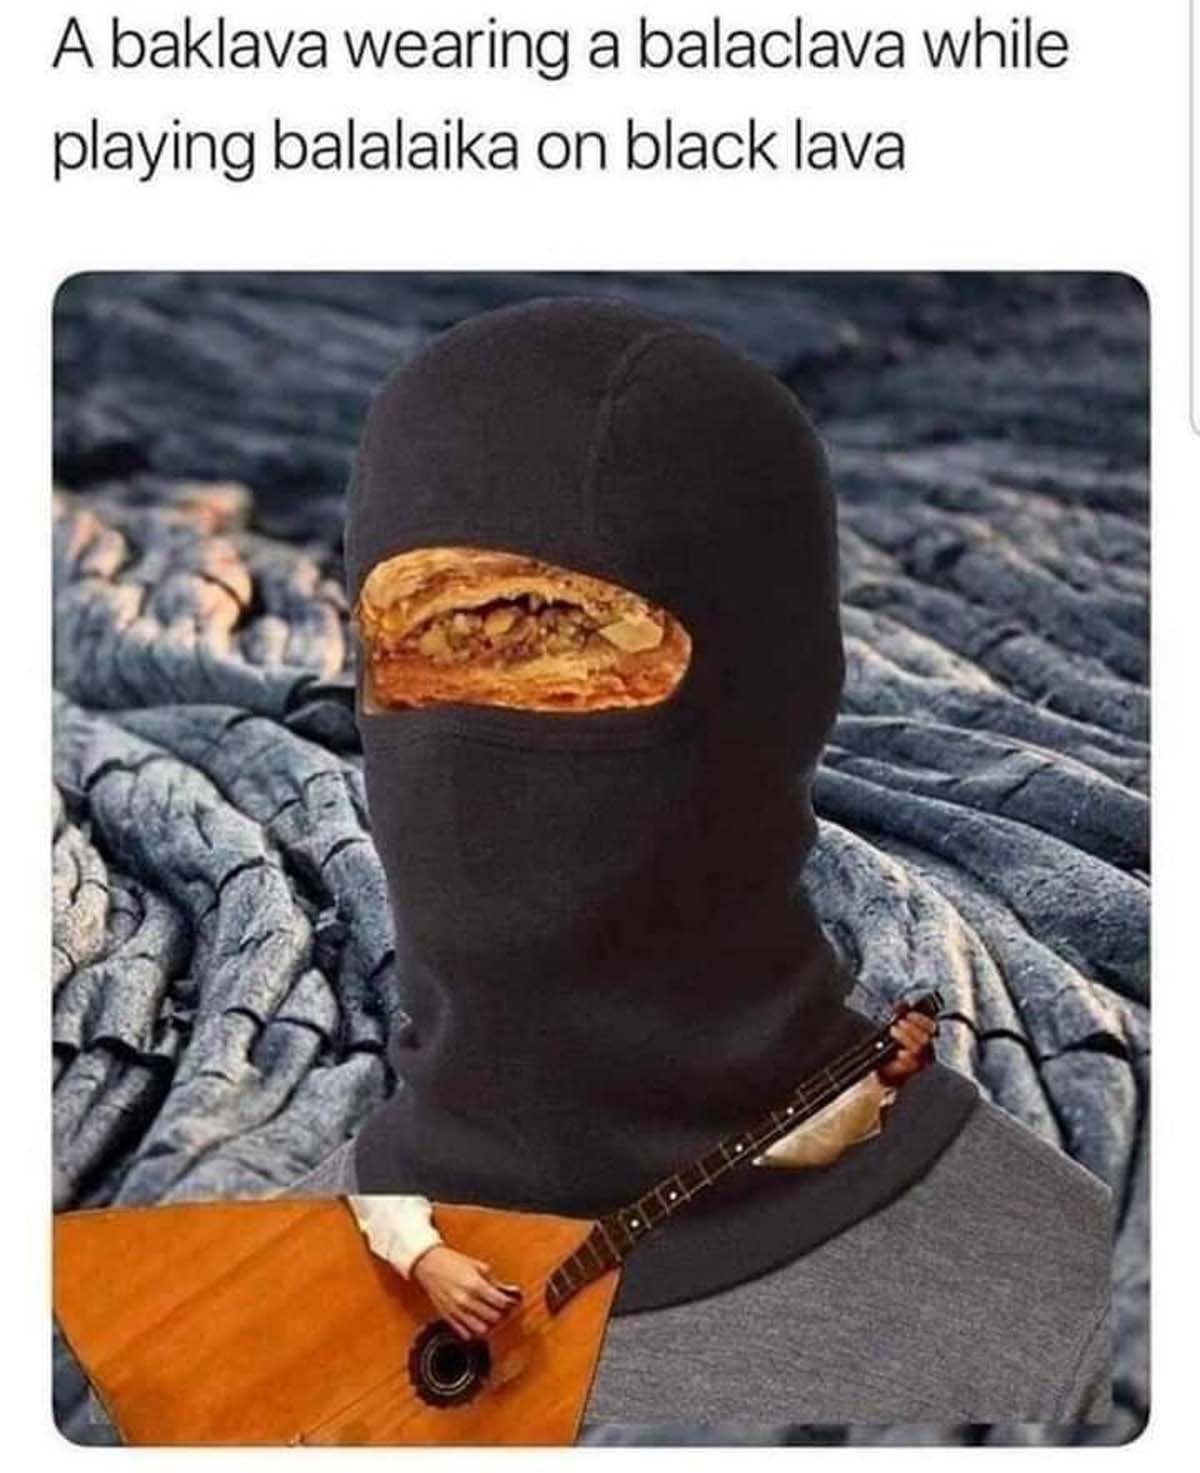 baklava wearing a balaclava - A baklava wearing a balaclava while playing balalaika on black lava